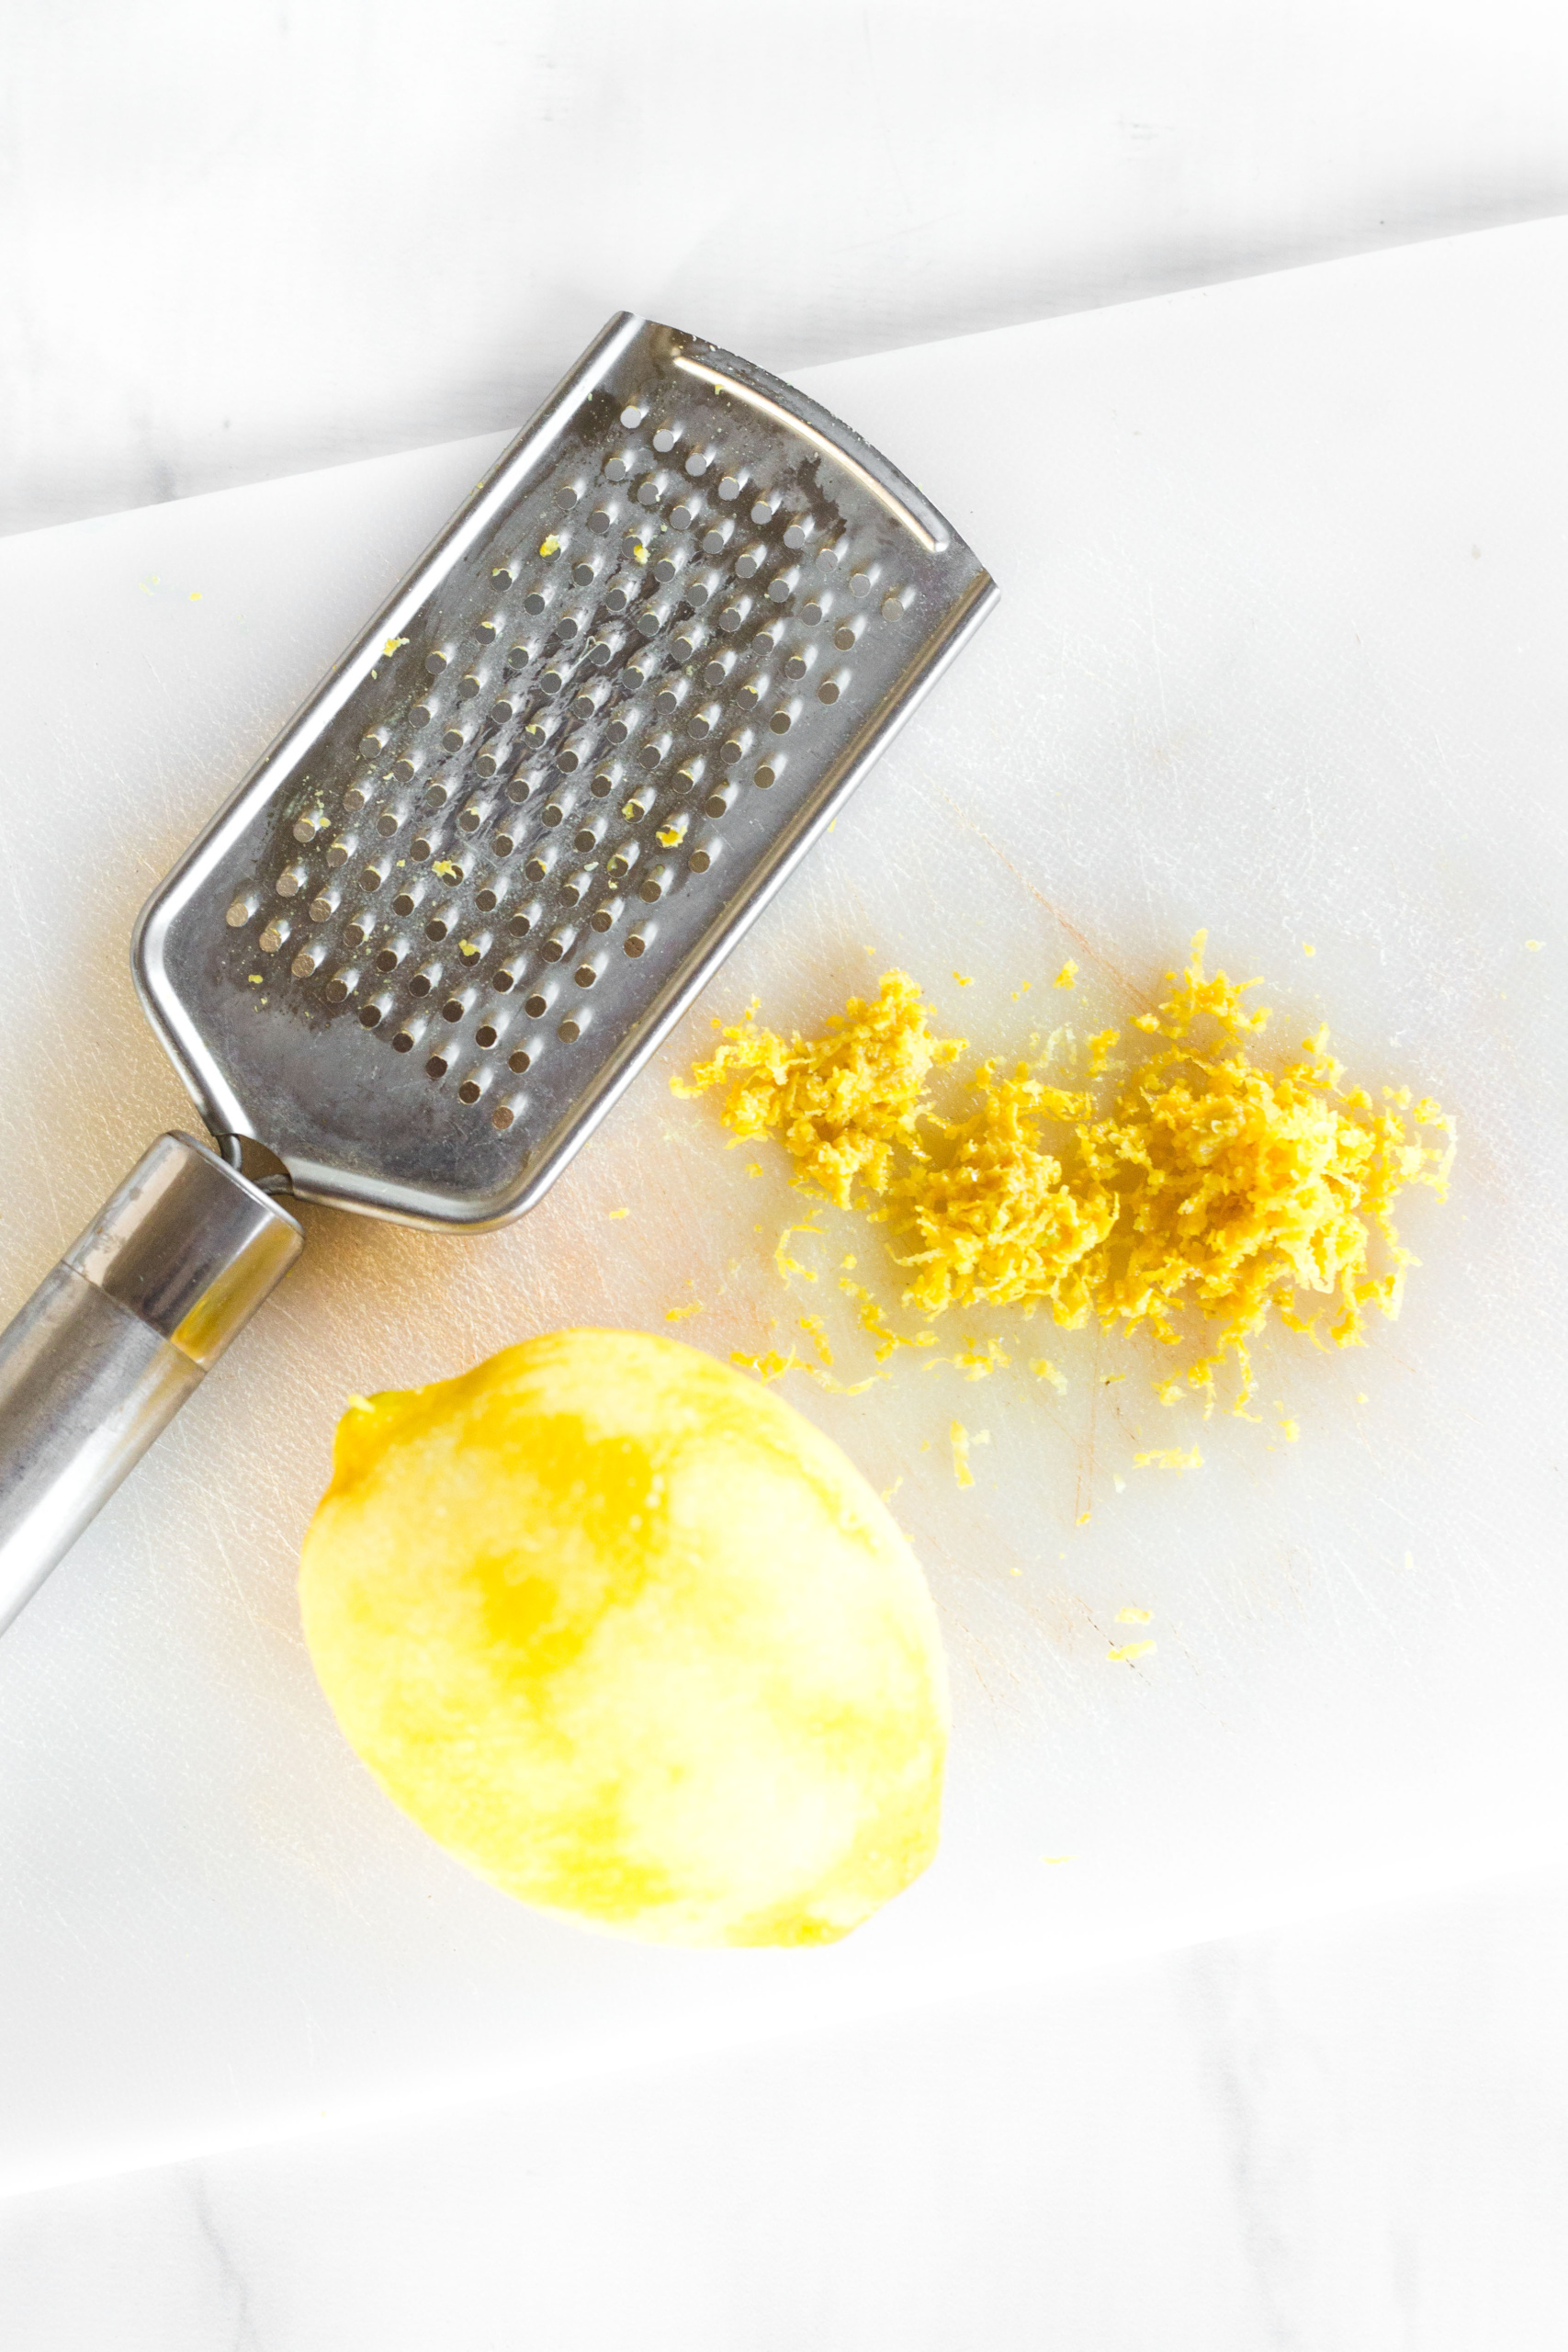 Freshly grated lemon zest on cutting board.